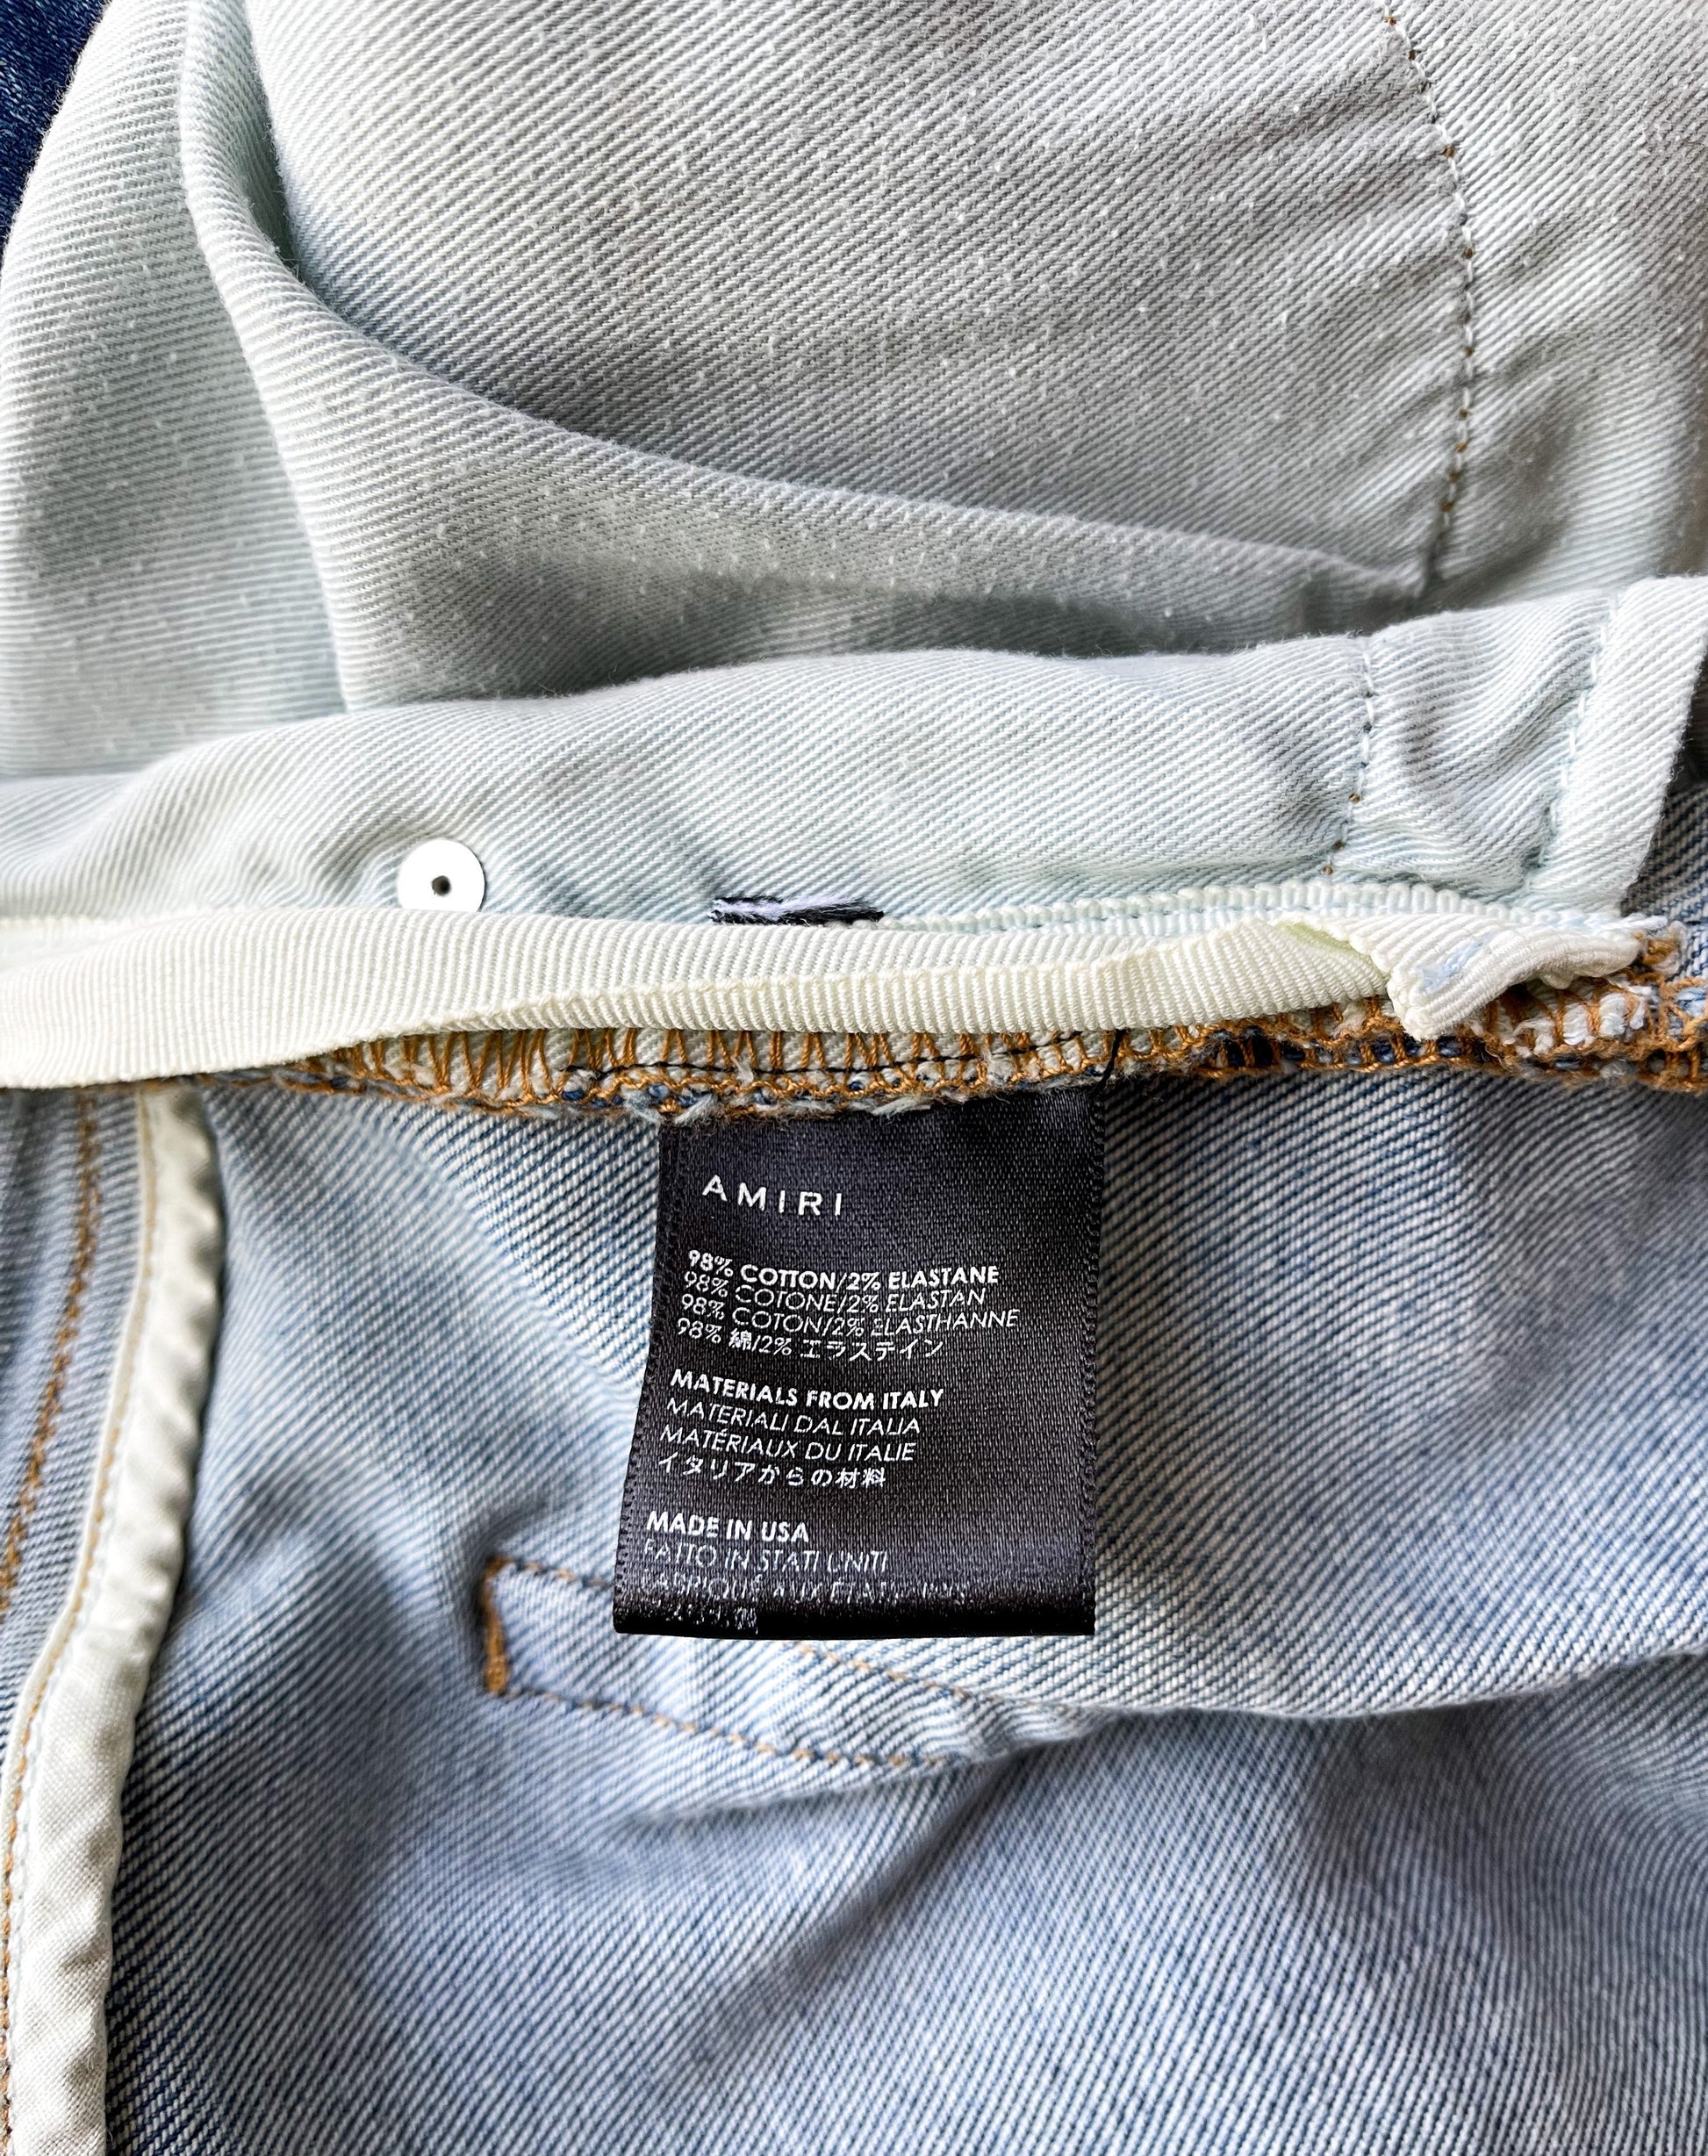 Louis Vuitton Baggy Tourist VS. Purist Tuffetage Jeans – Savonches